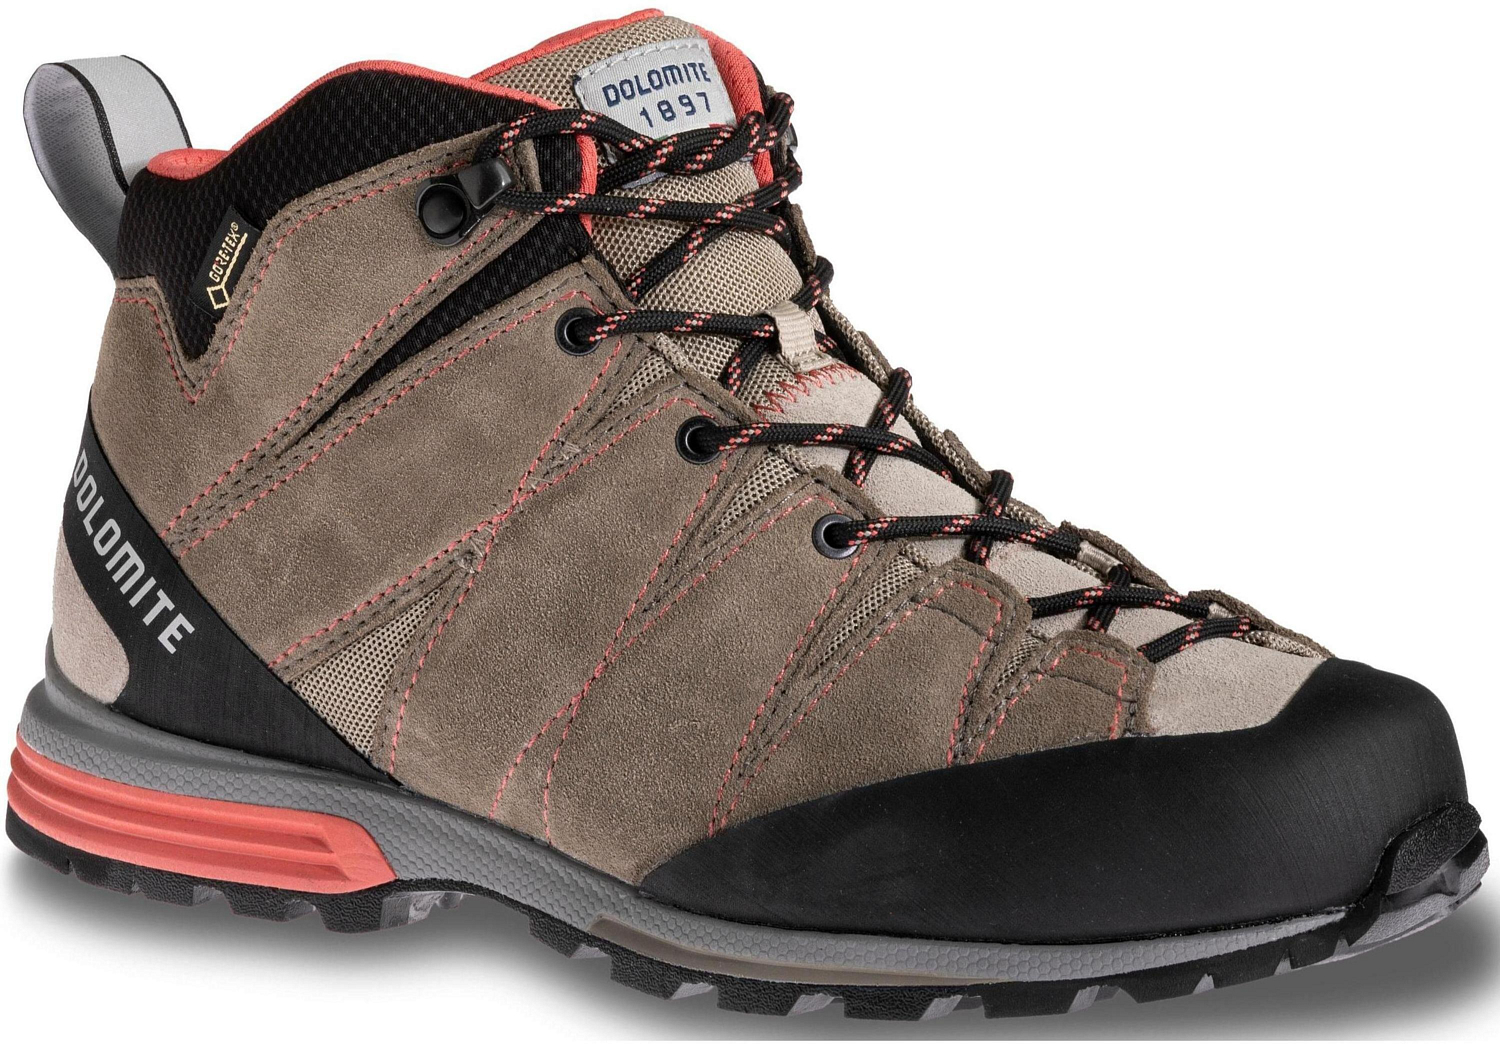 Ботинки Dolomite Diagonal Pro Mid GTX W's Mud Gr/Crl R / светло-коричневый